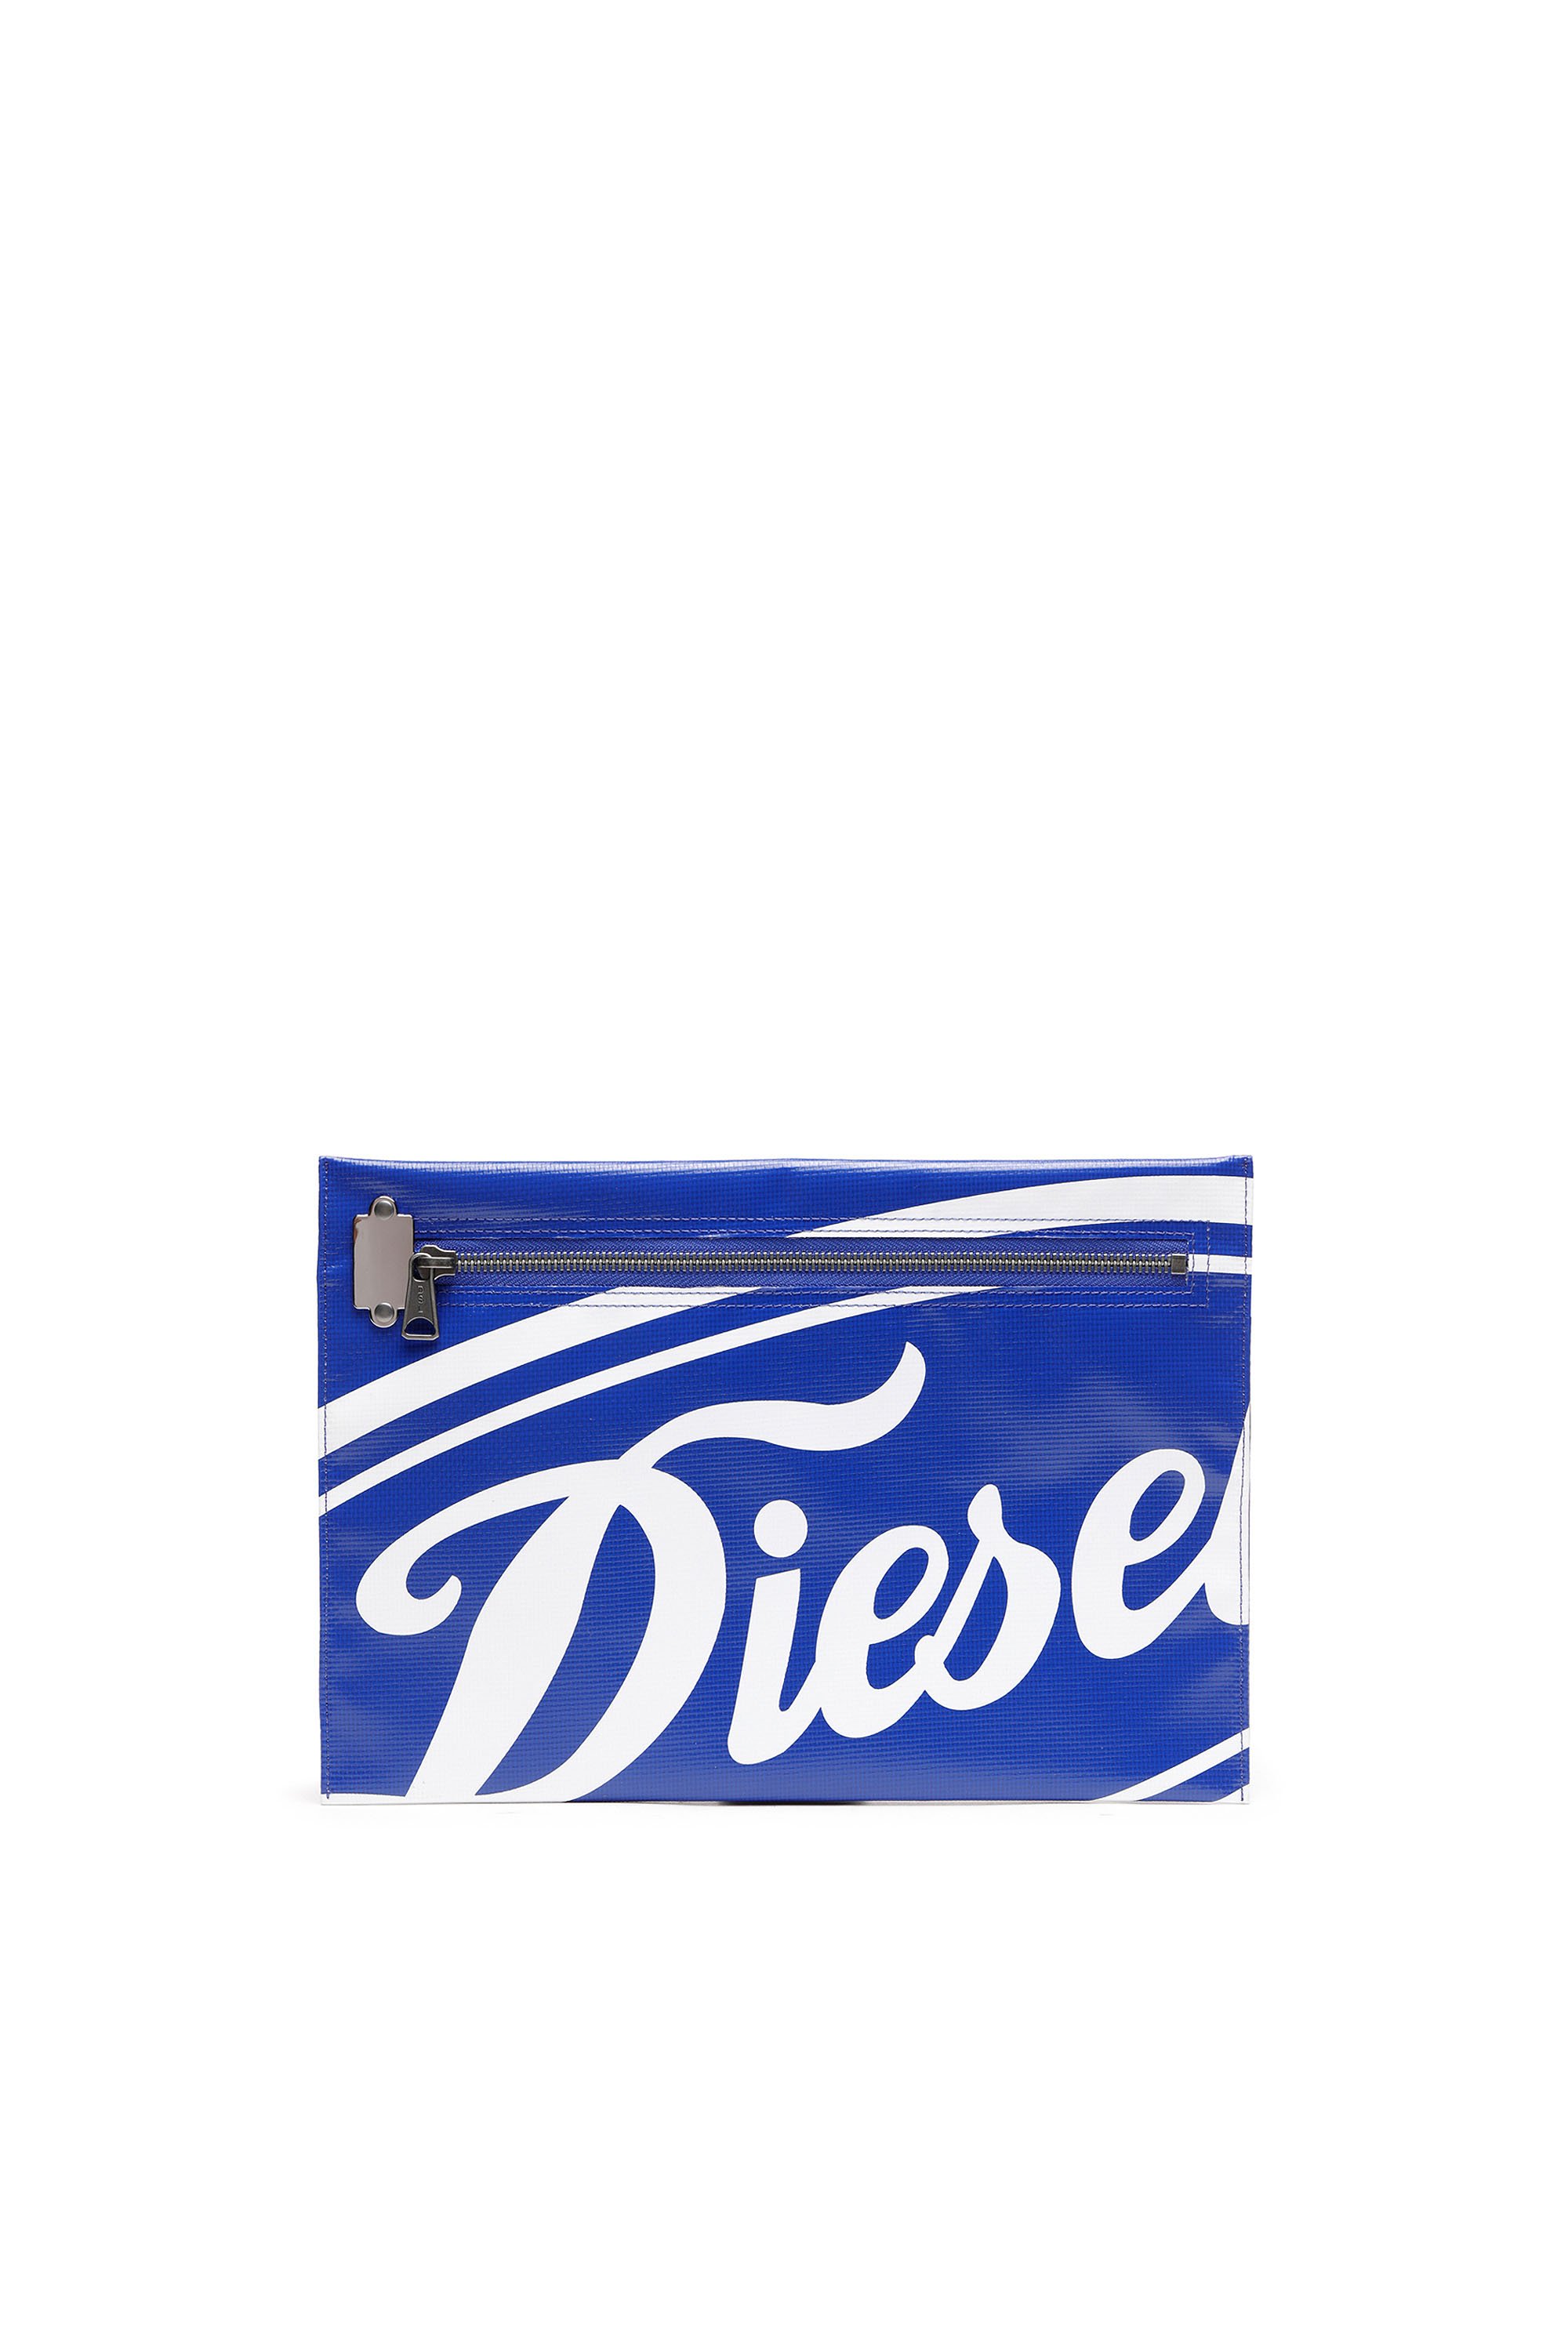 Diesel - SLYW, Bleu/Blanc - Image 1